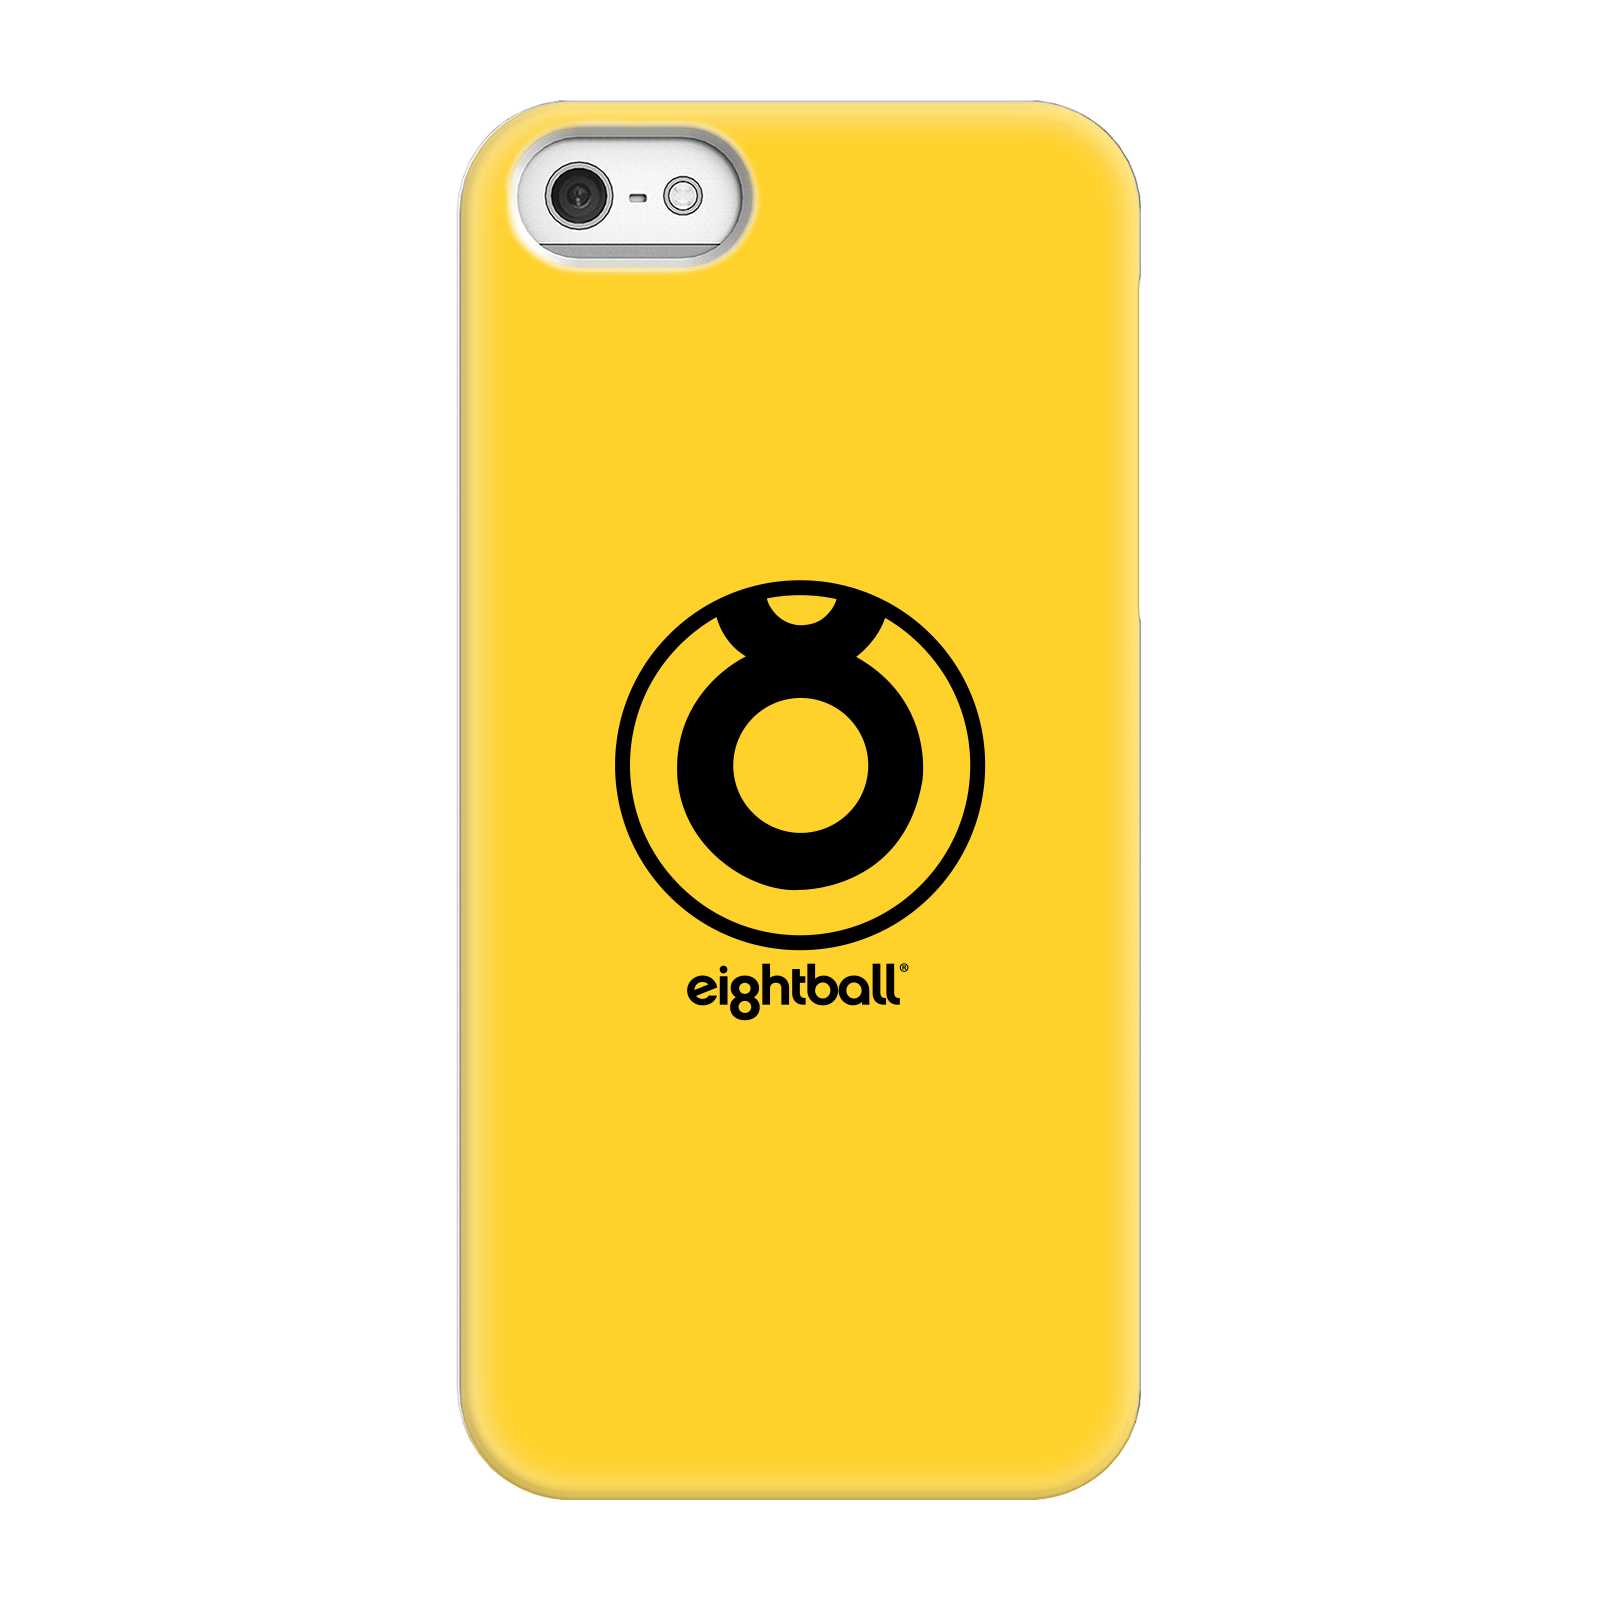 Funda Móvil Ei8htball Large Circle Logo para iPhone y Android - iPhone 5/5s - Carcasa rígida - Mate